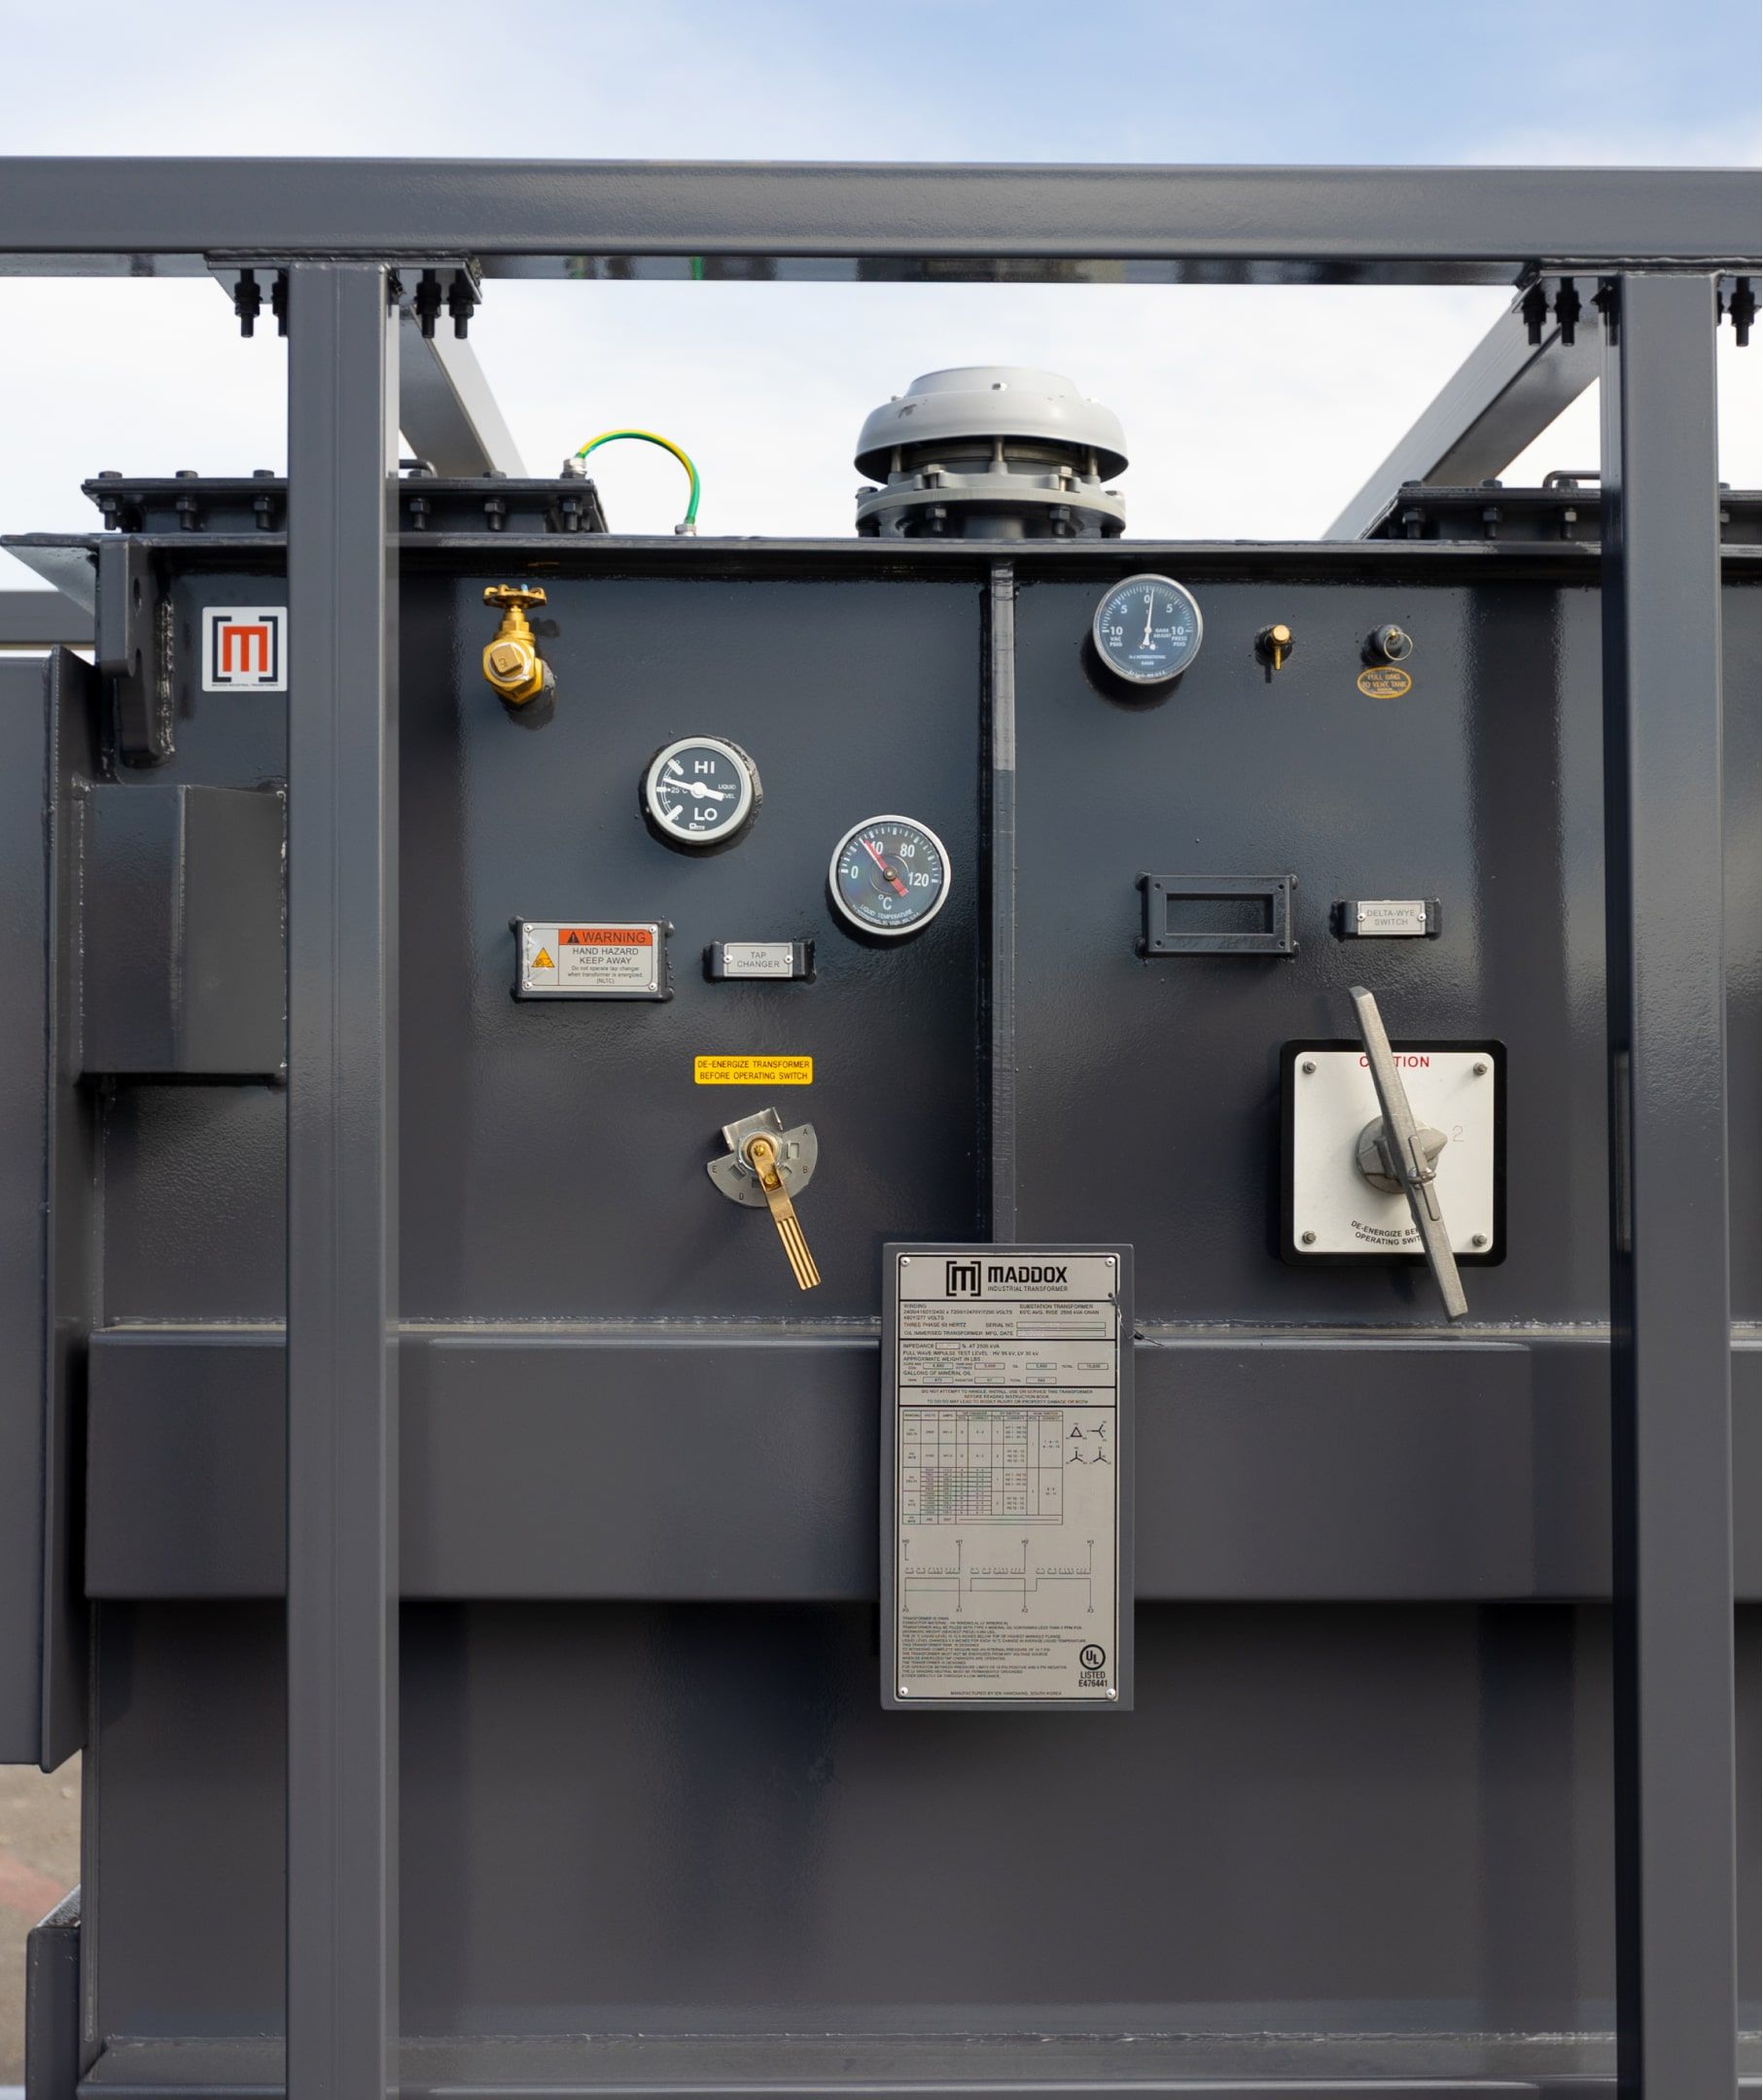 A close up image of a Maddox rental transformer